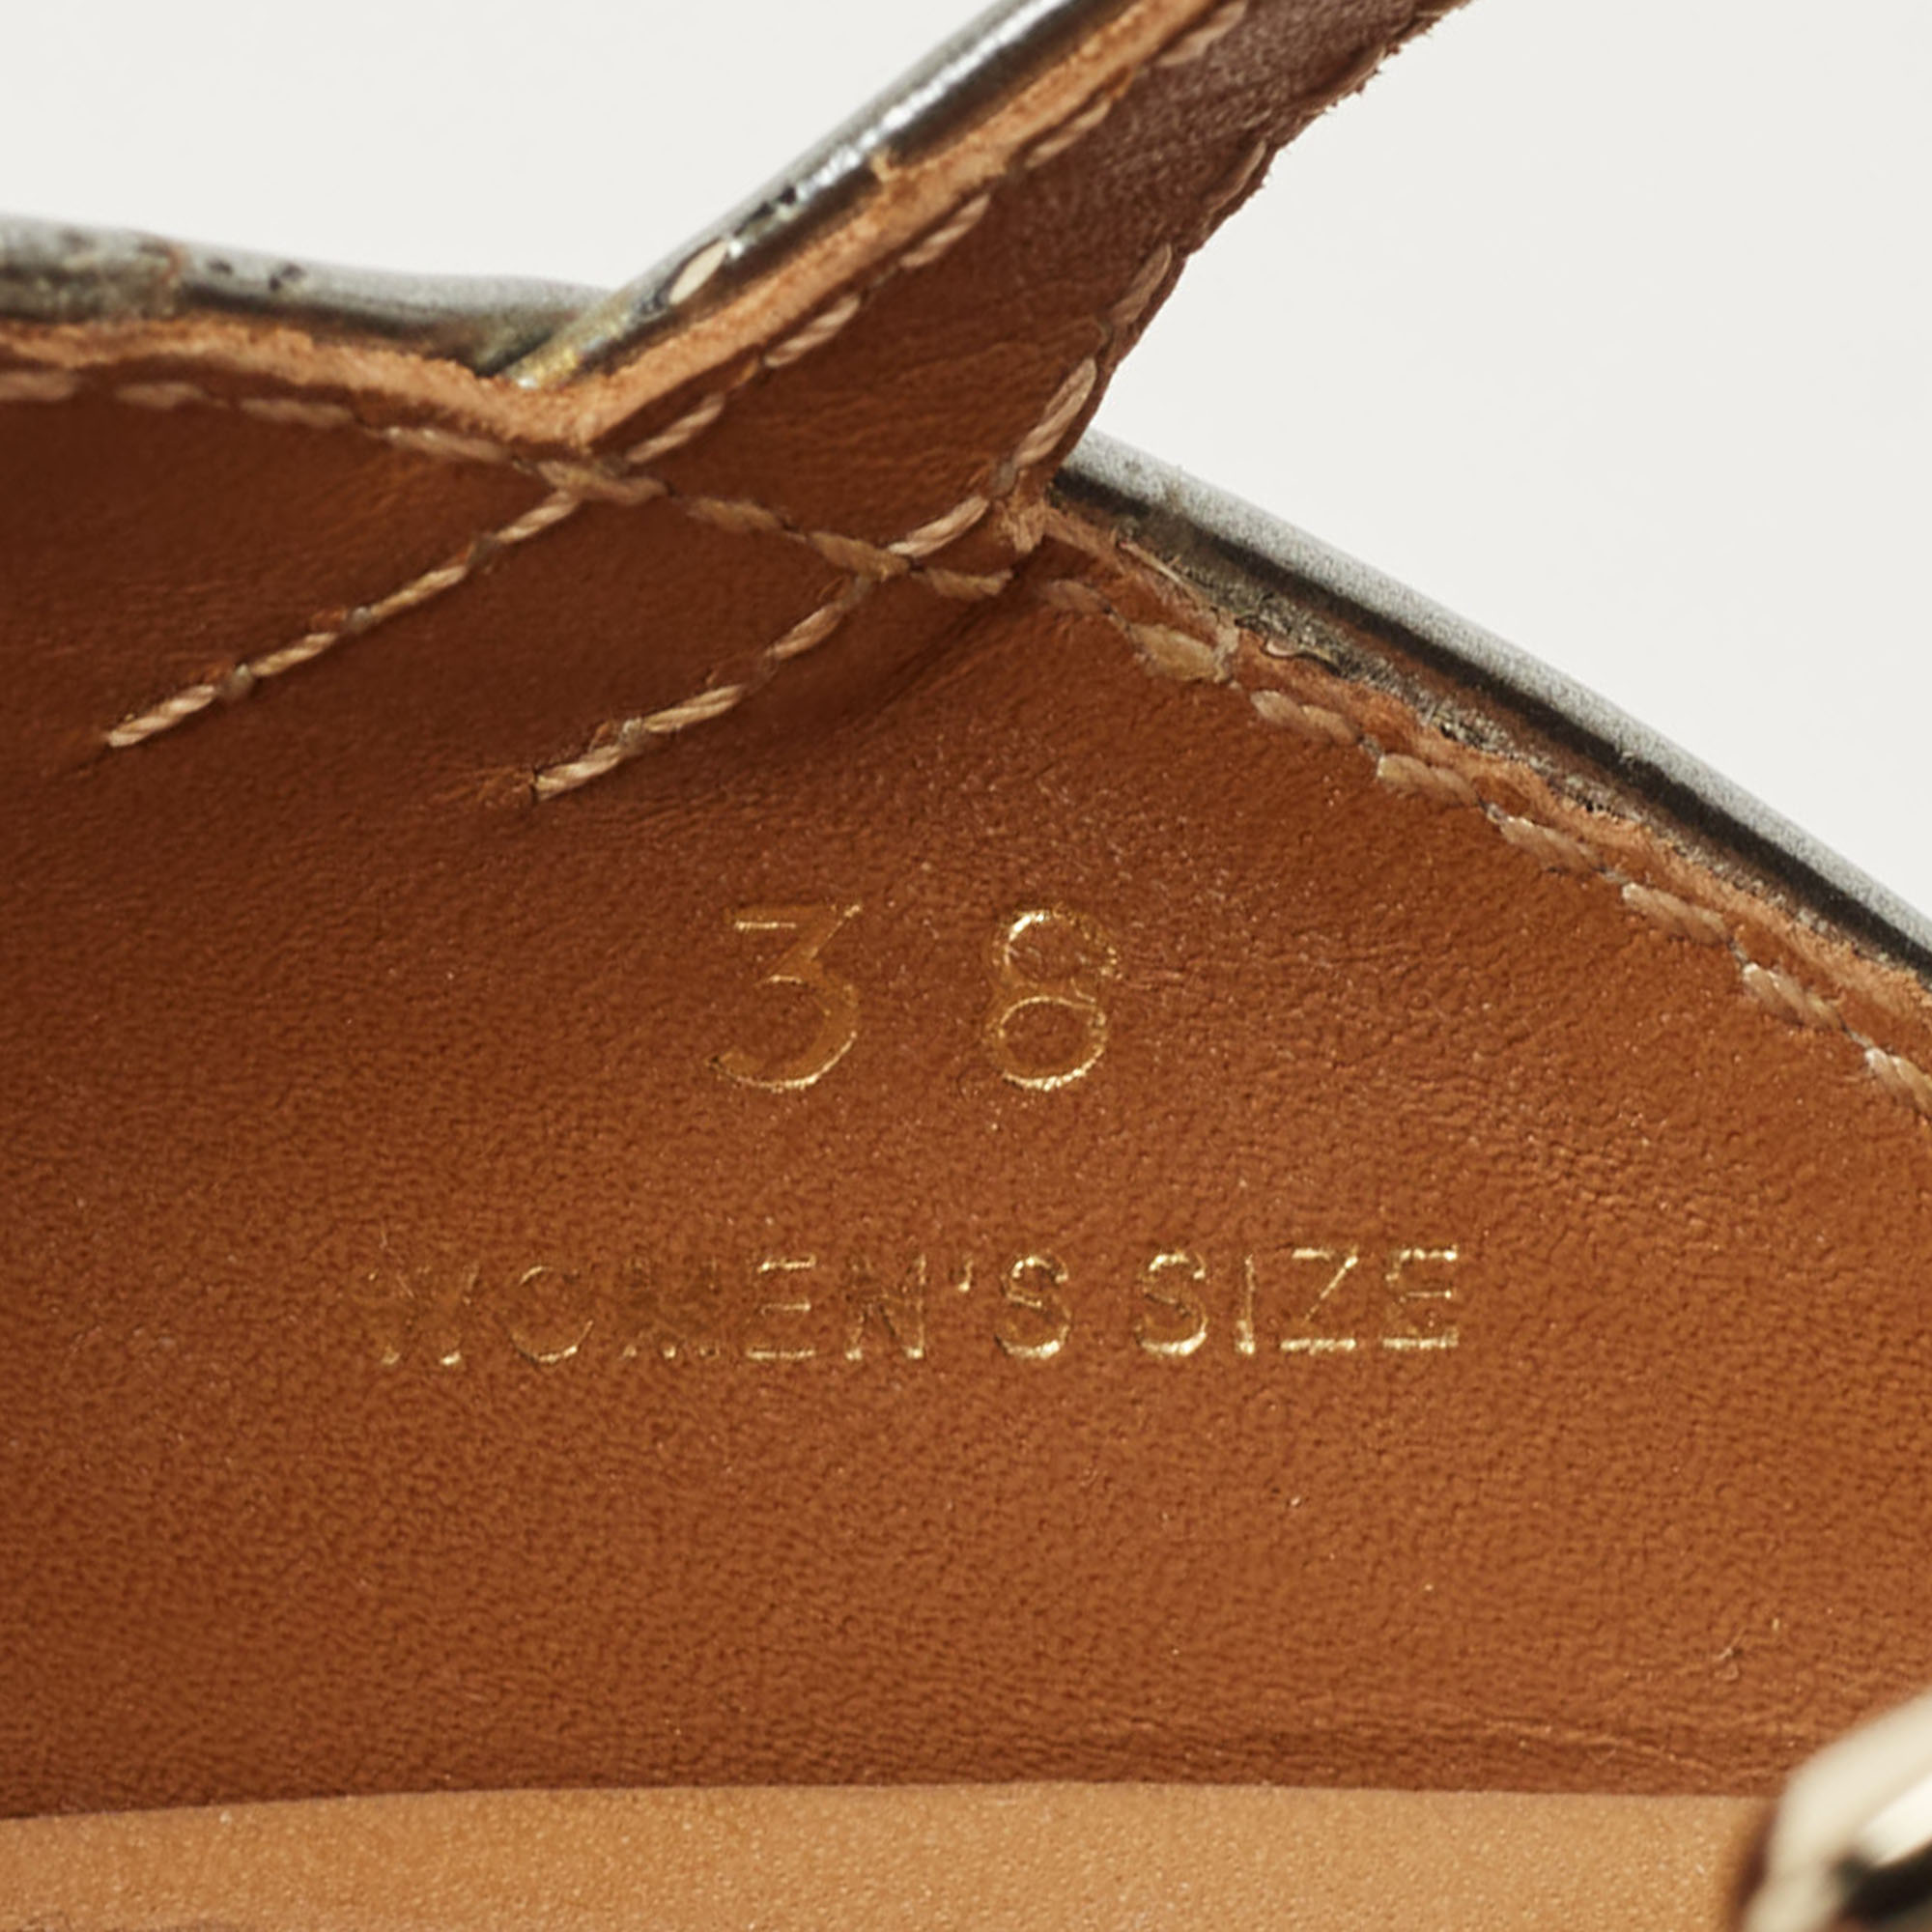 Tod's Silver Leather Platform Sandals Size 38